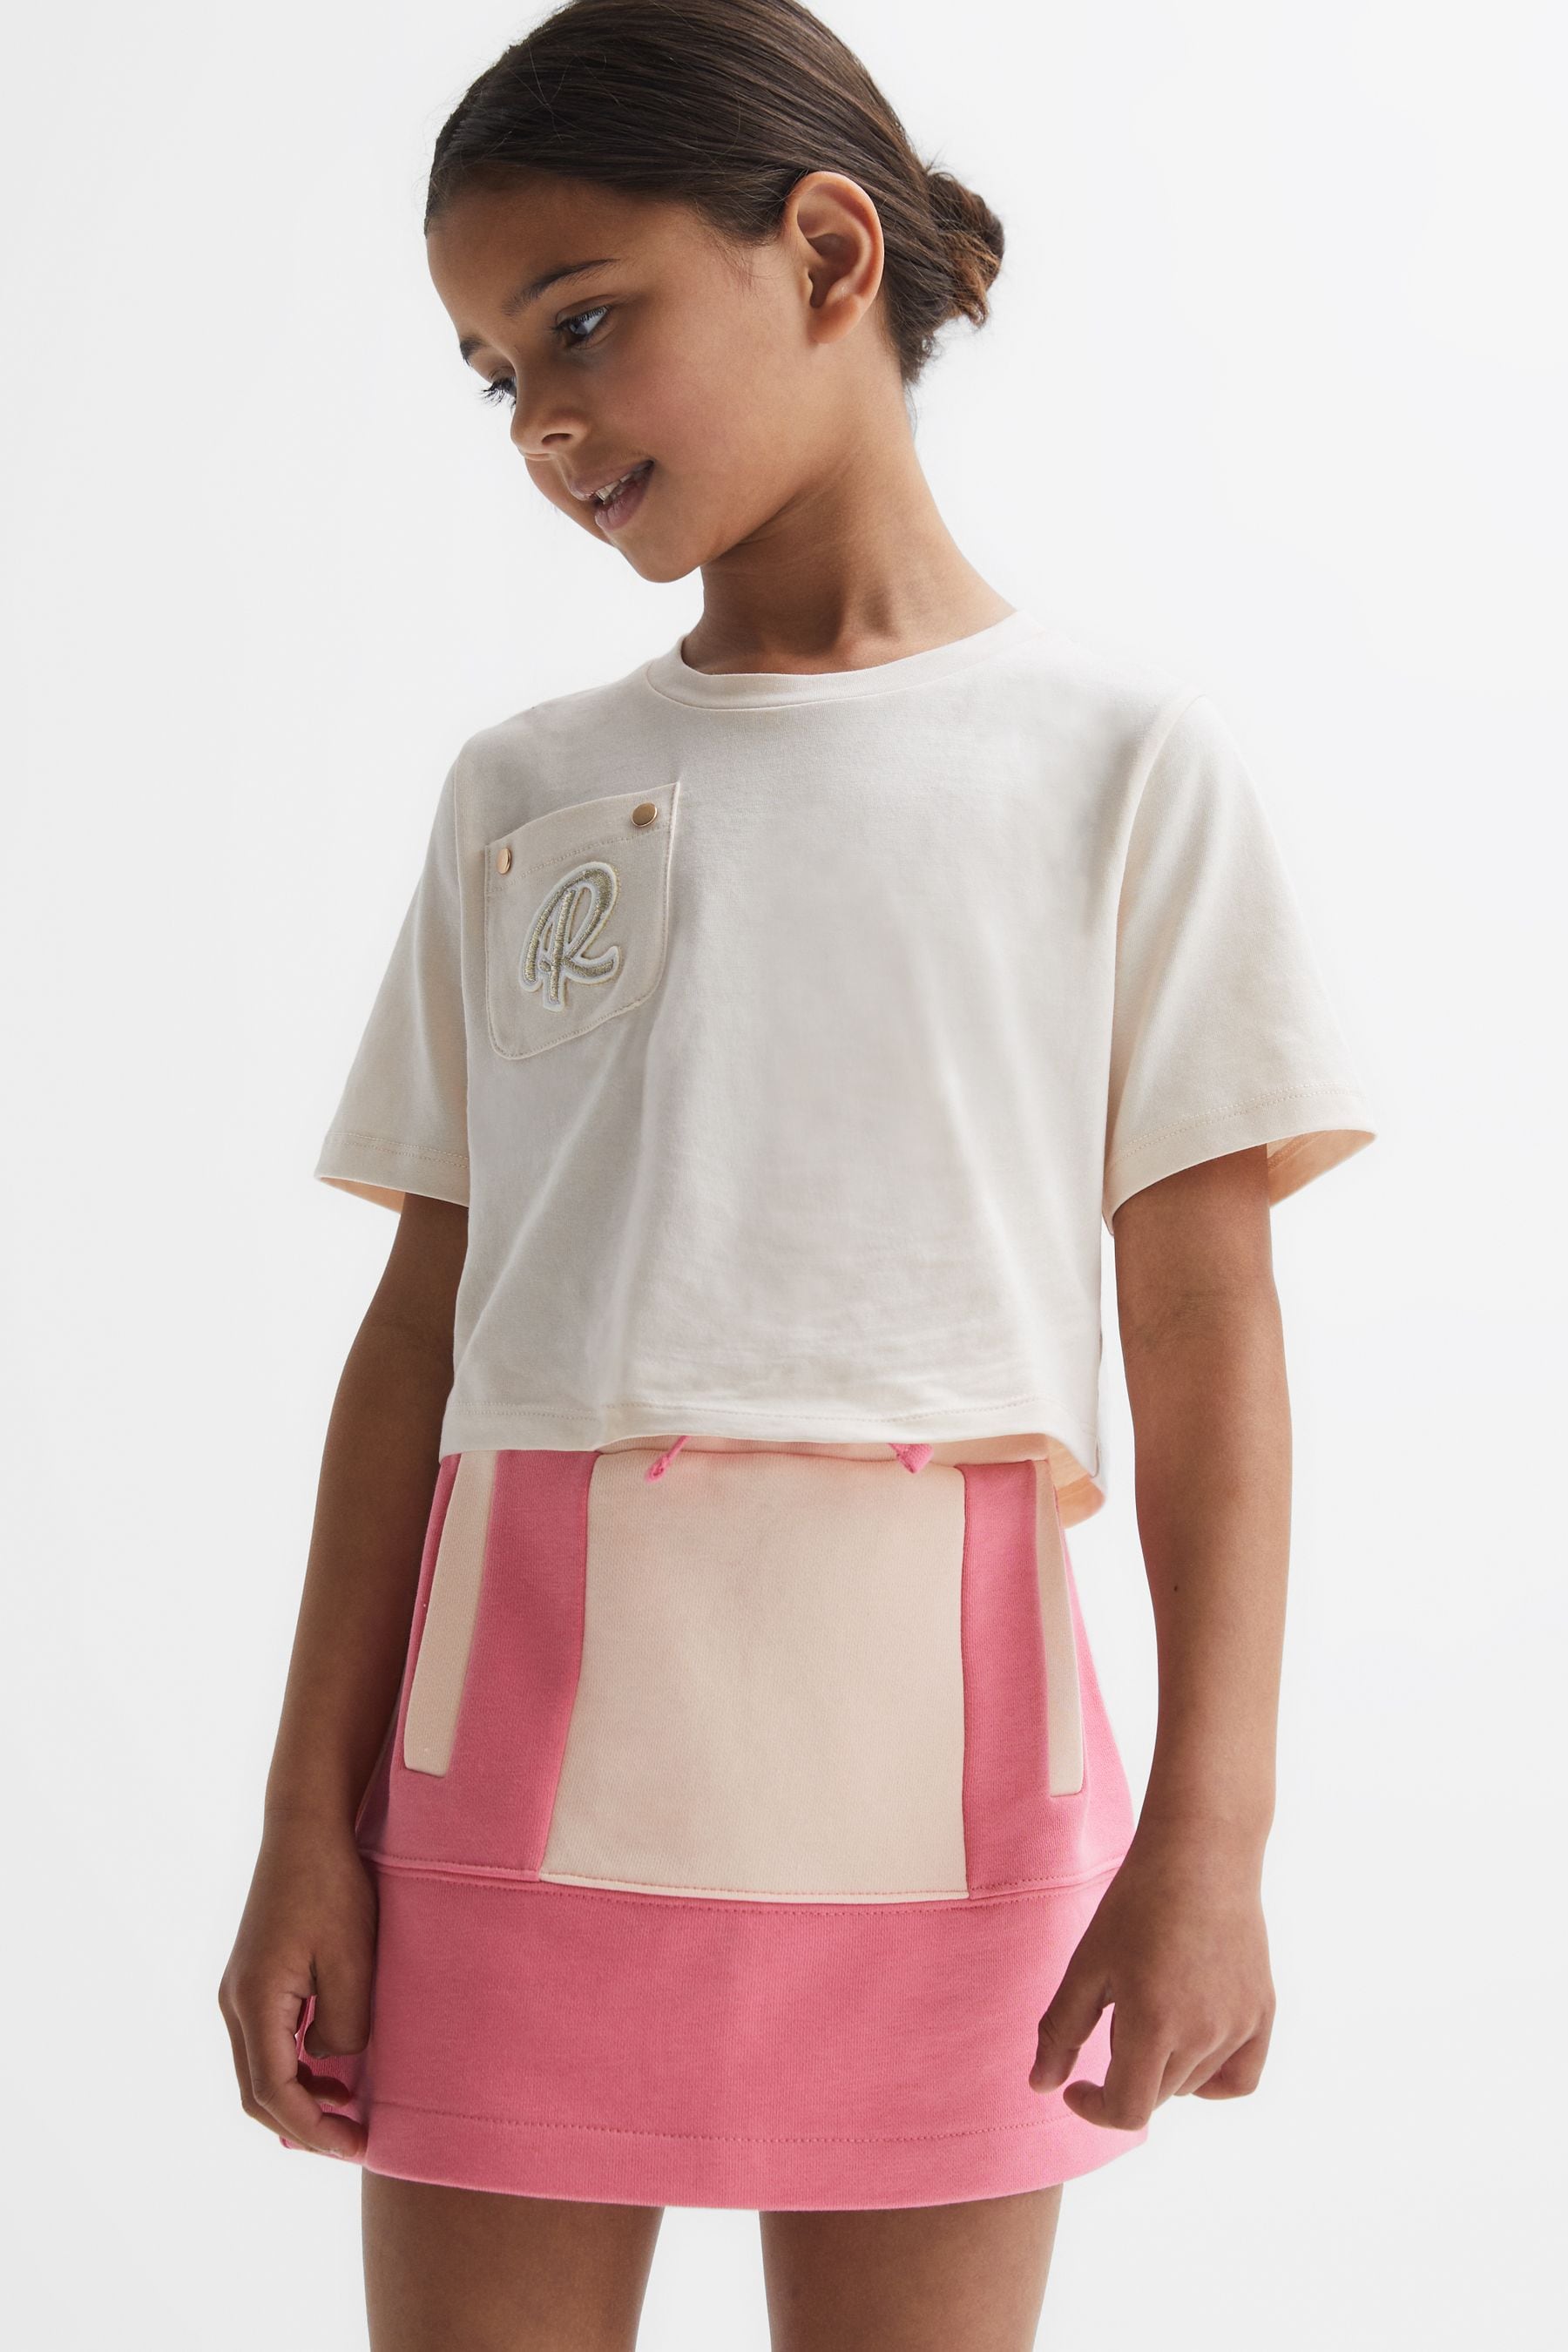 Reiss Kids' Macey - Pink Junior Colourblock Cotton Drawstring Skirt, Age 4-5 Years